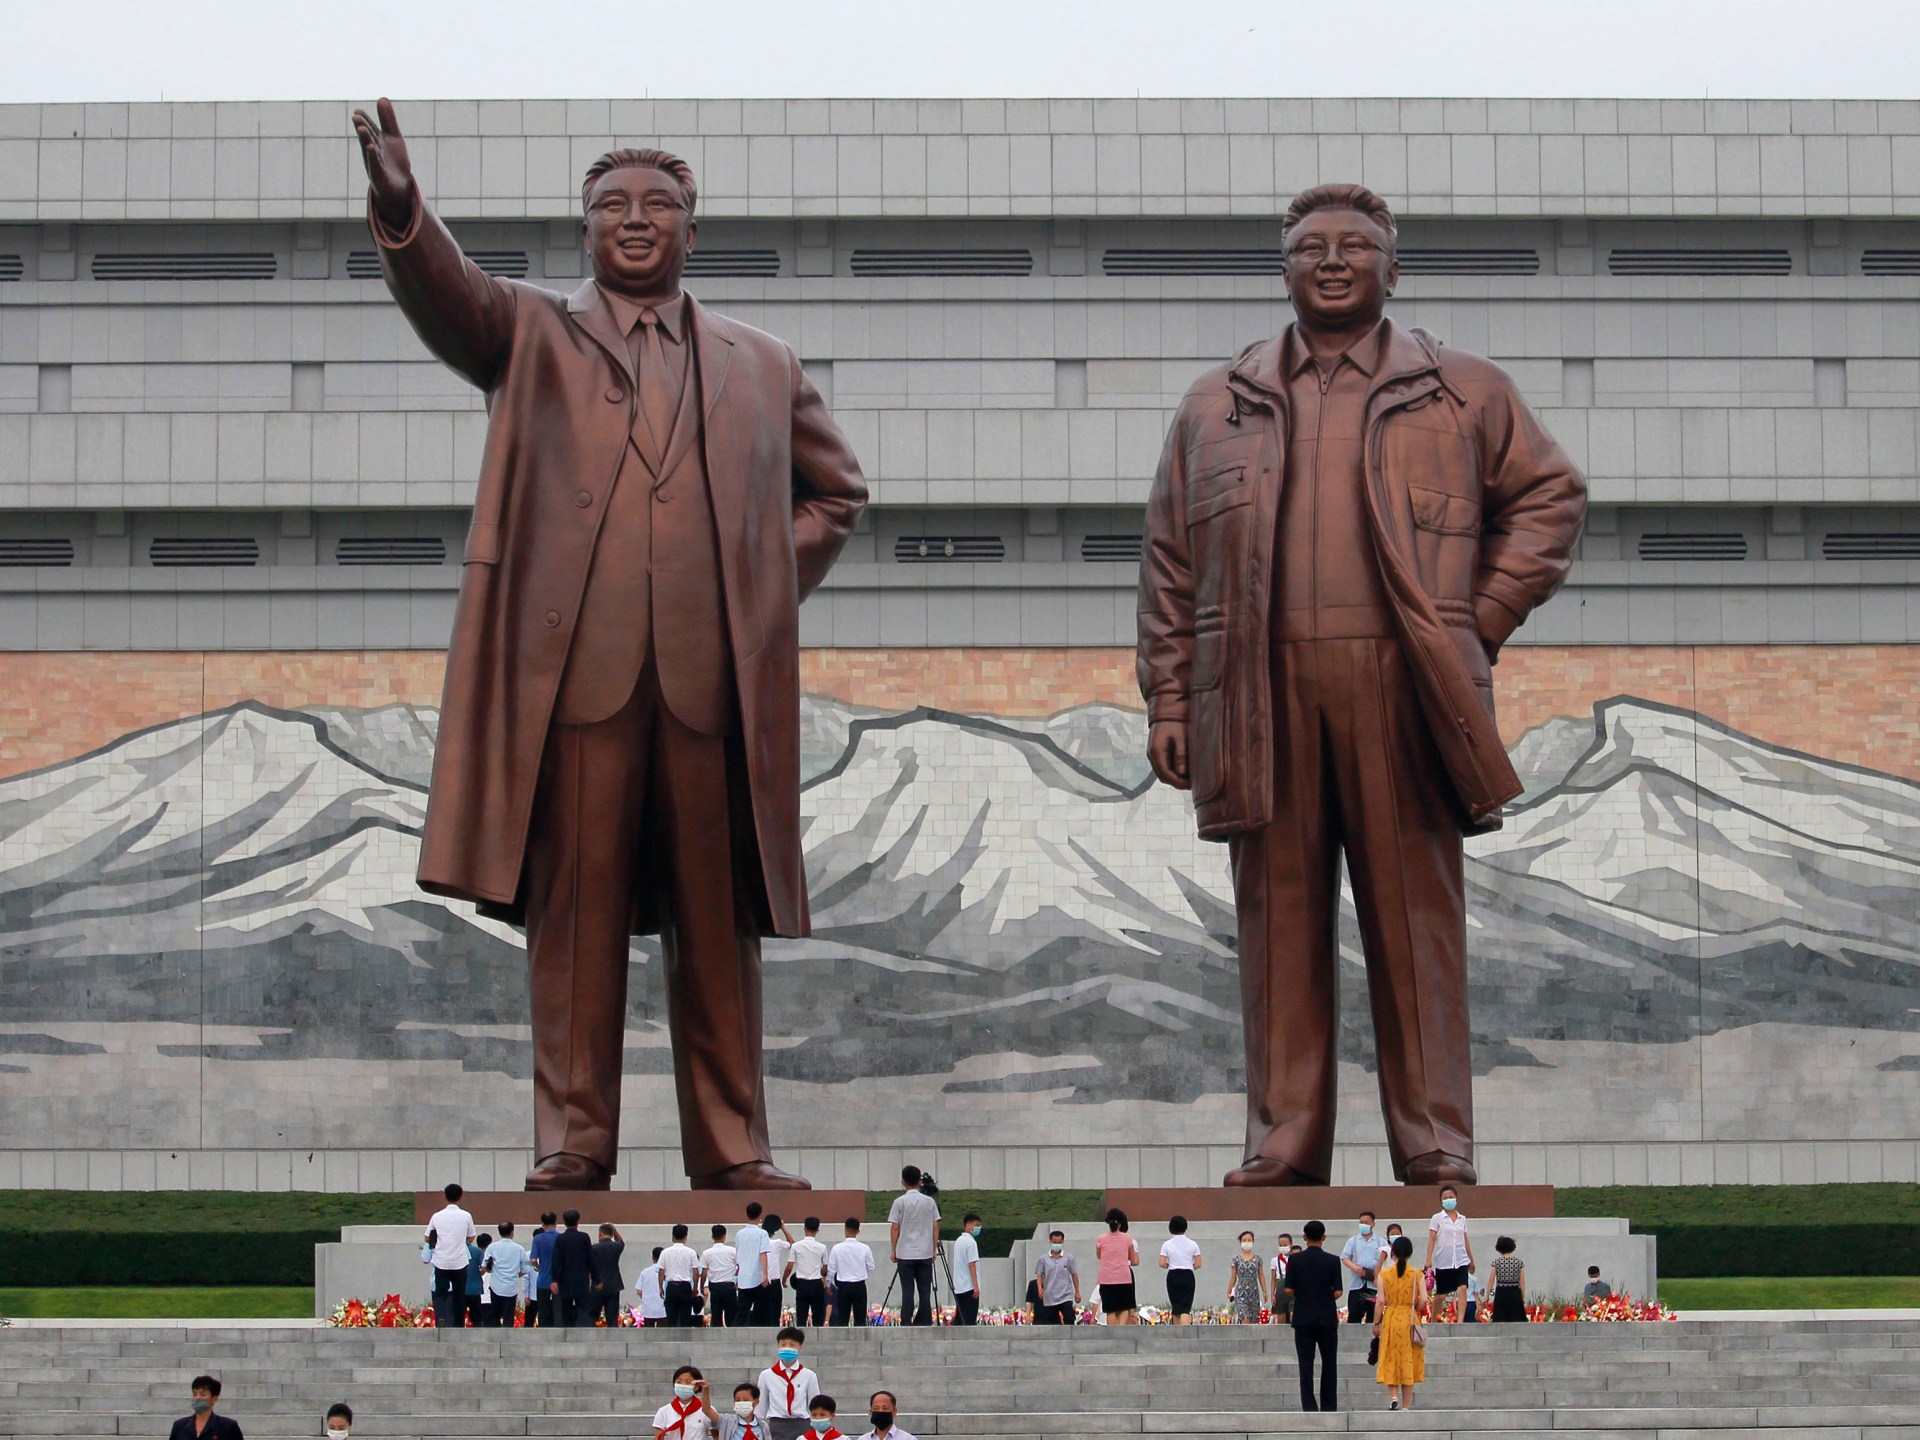 Korea Utara tenang setelah tentara AS melintasi perbatasan dari Korea Selatan |  Berita Politik